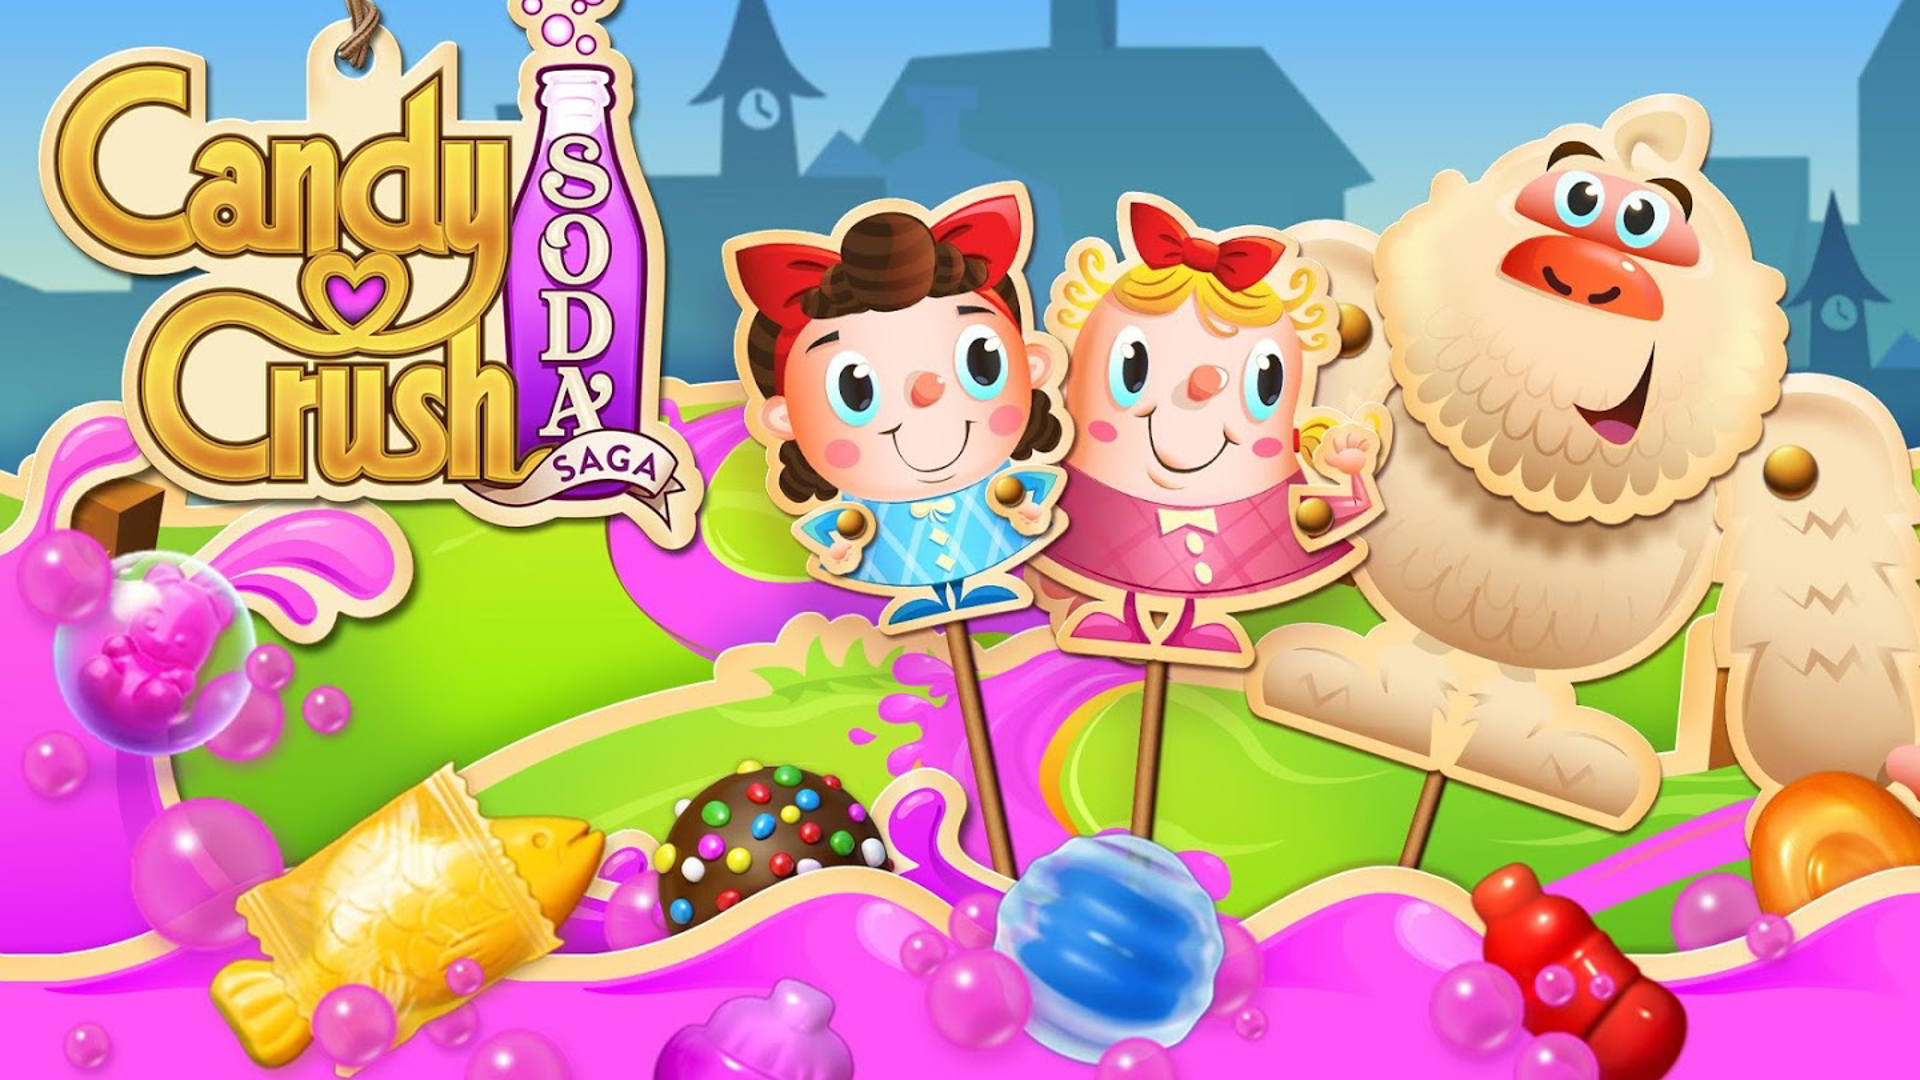 candy crush soda saga game free download for pc windows 7